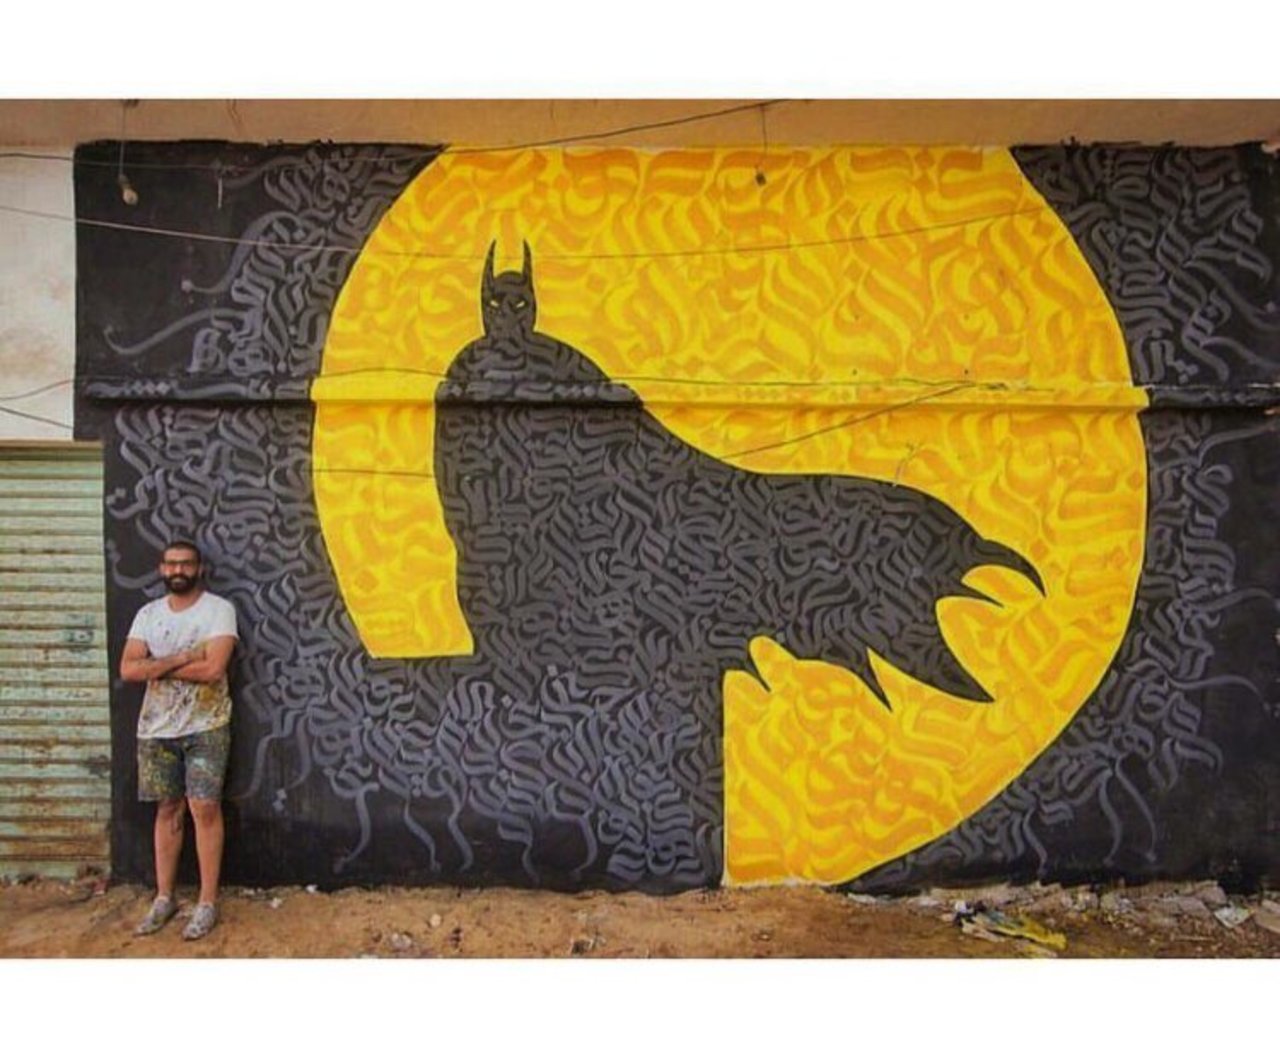 My Batman 🦇 Jedary project #egypt #mural #calligraphy #typography #graffiti #yellow #muralart #art https://t.co/3yZkw8H347